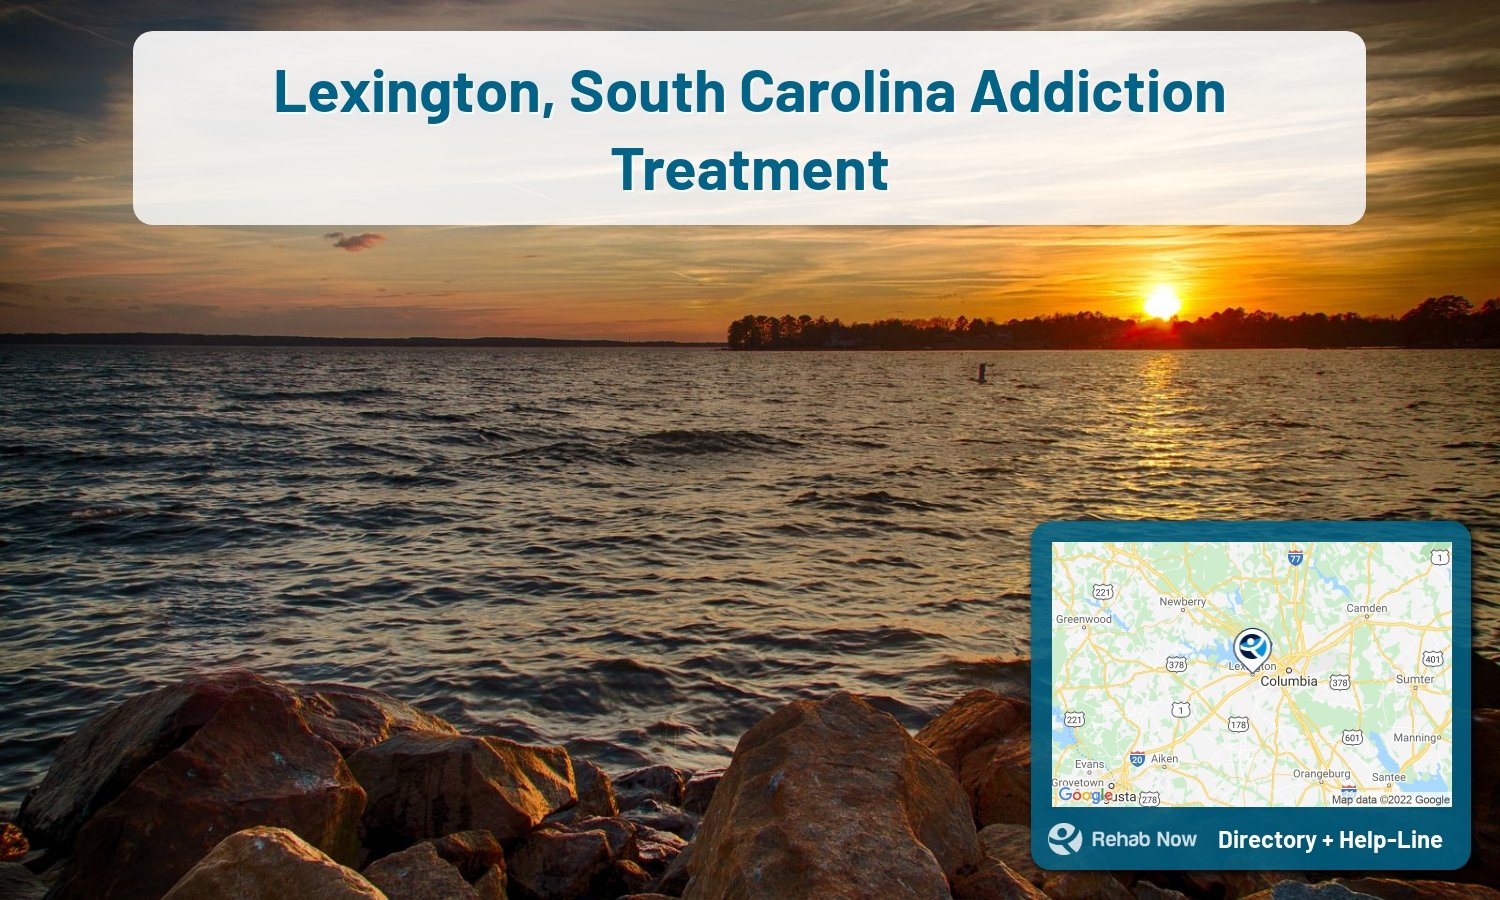 Lexington, SC Treatment Centers. Find drug rehab in Lexington, South Carolina, or detox and treatment programs. Get the right help now!